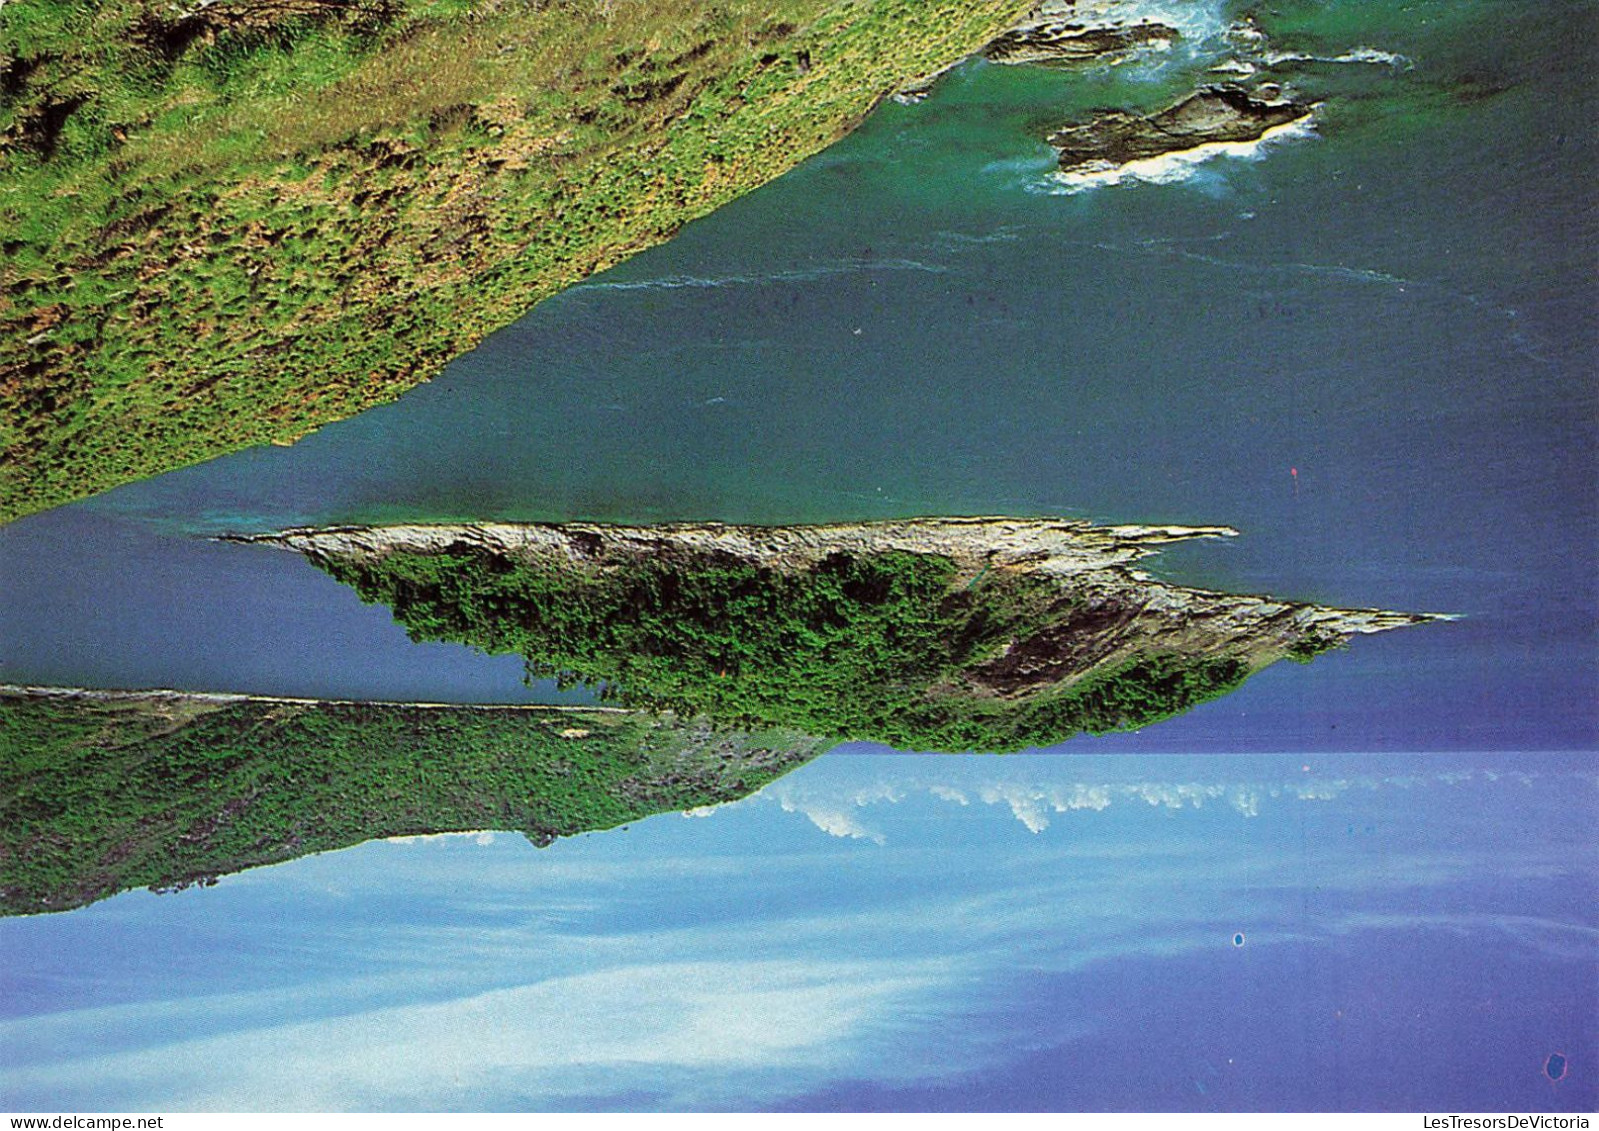 THAÏLANDE - The Man Island In Front Of Lerm Phromtep Phunket - Province Southern Part Of Thailand - Carte Postale - Thaïlande